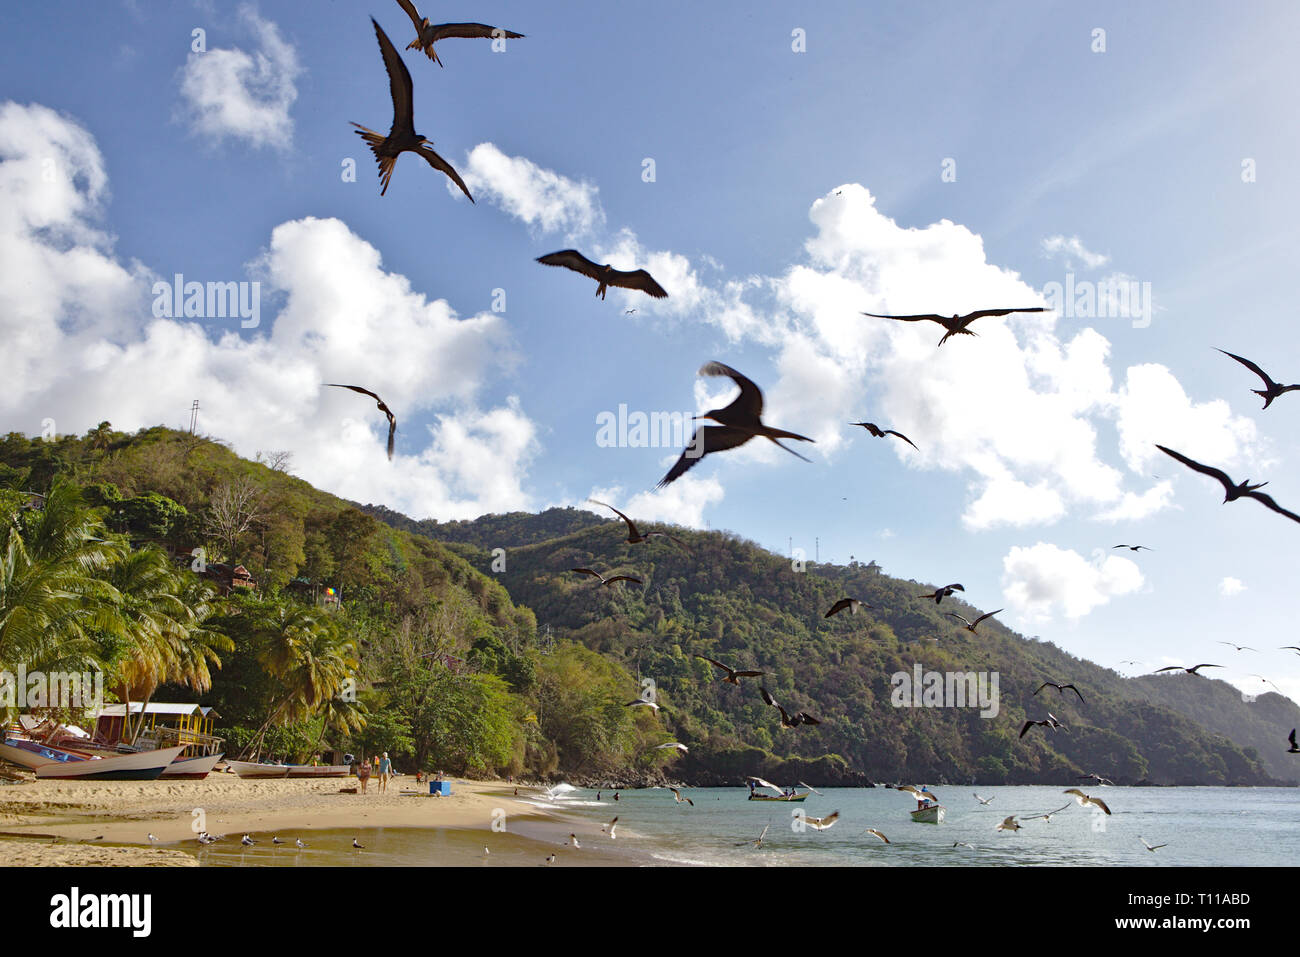 https://c8.alamy.com/comp/T11ABD/man-o-war-birds-circling-at-castara-beach-T11ABD.jpg